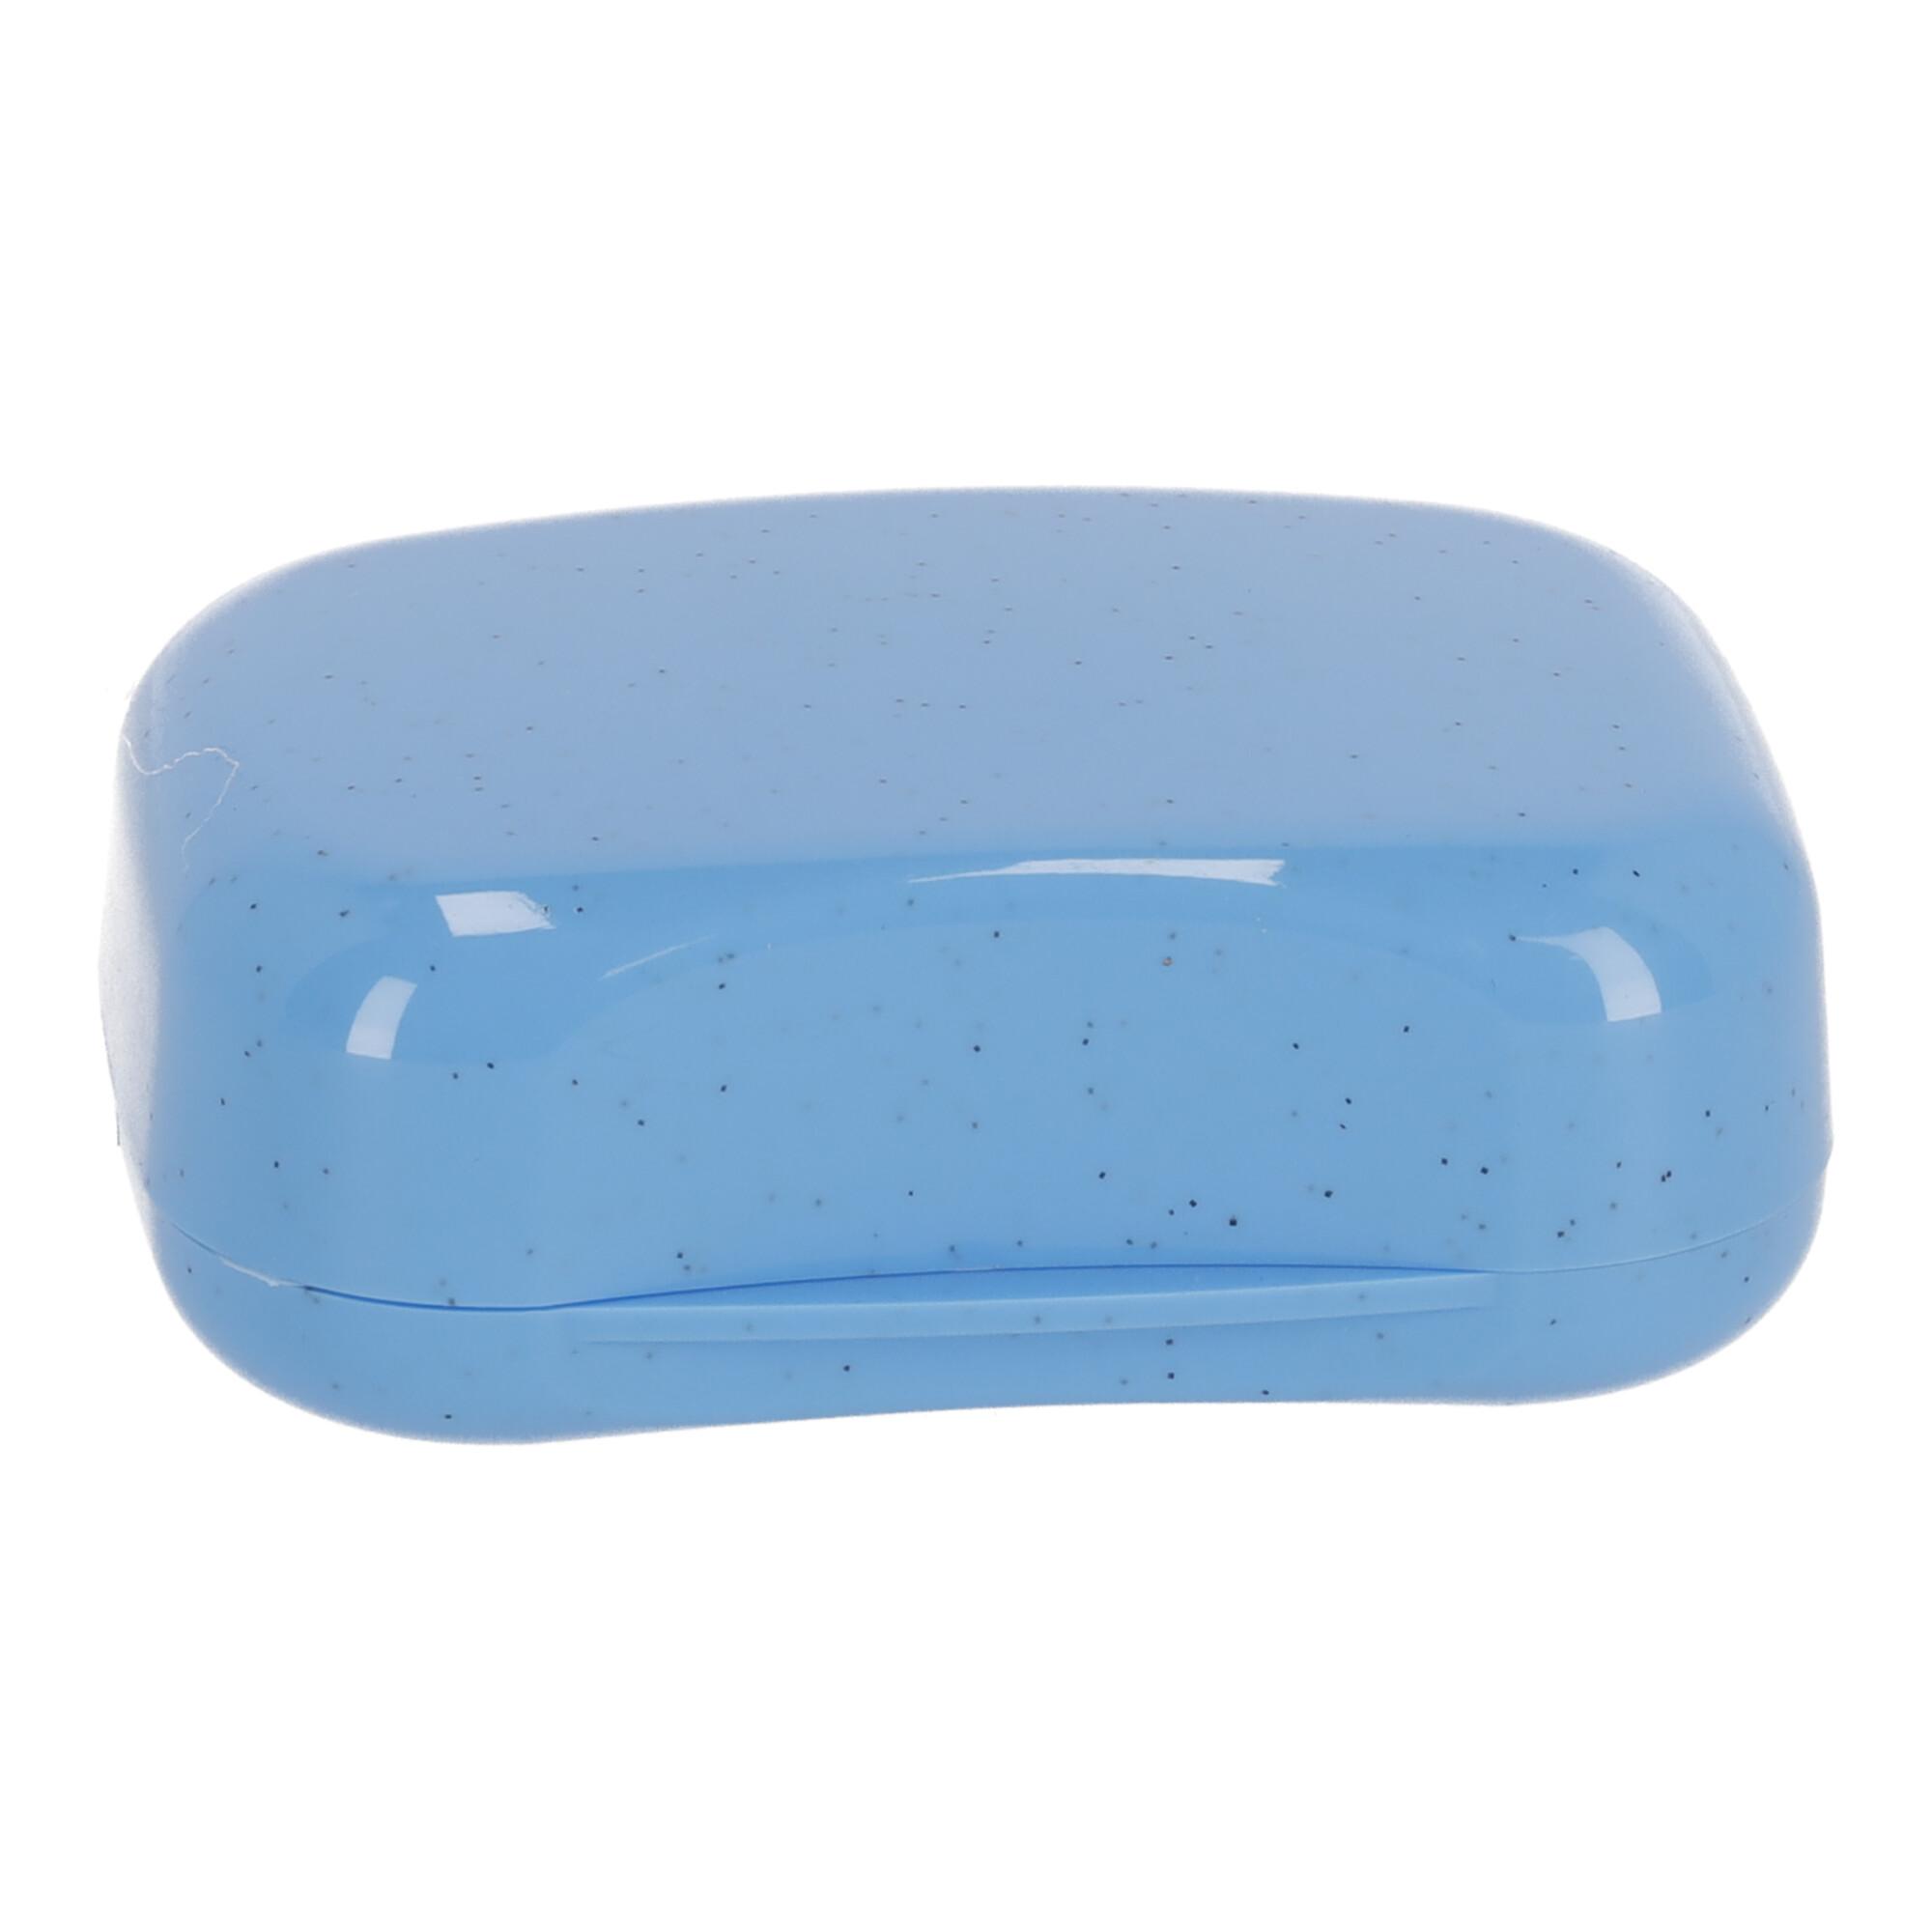 Tourist soap dish, closed plastic soap dish, type III - light blue